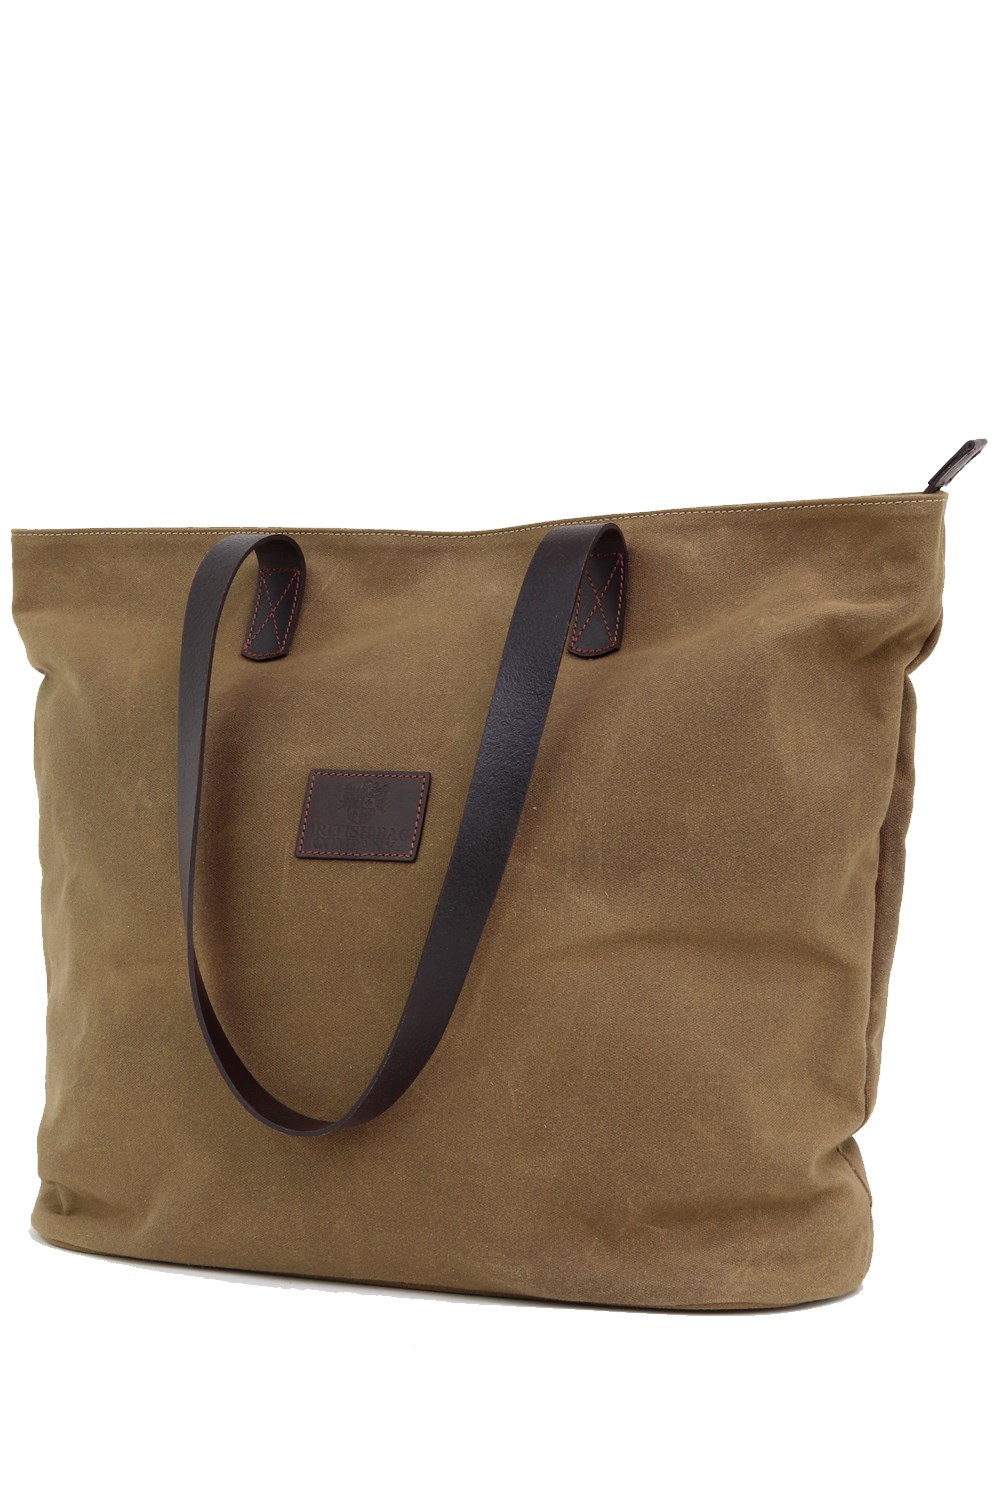 Ladies Waxed Canvas Tote Bag | Mountain Warehouse GB